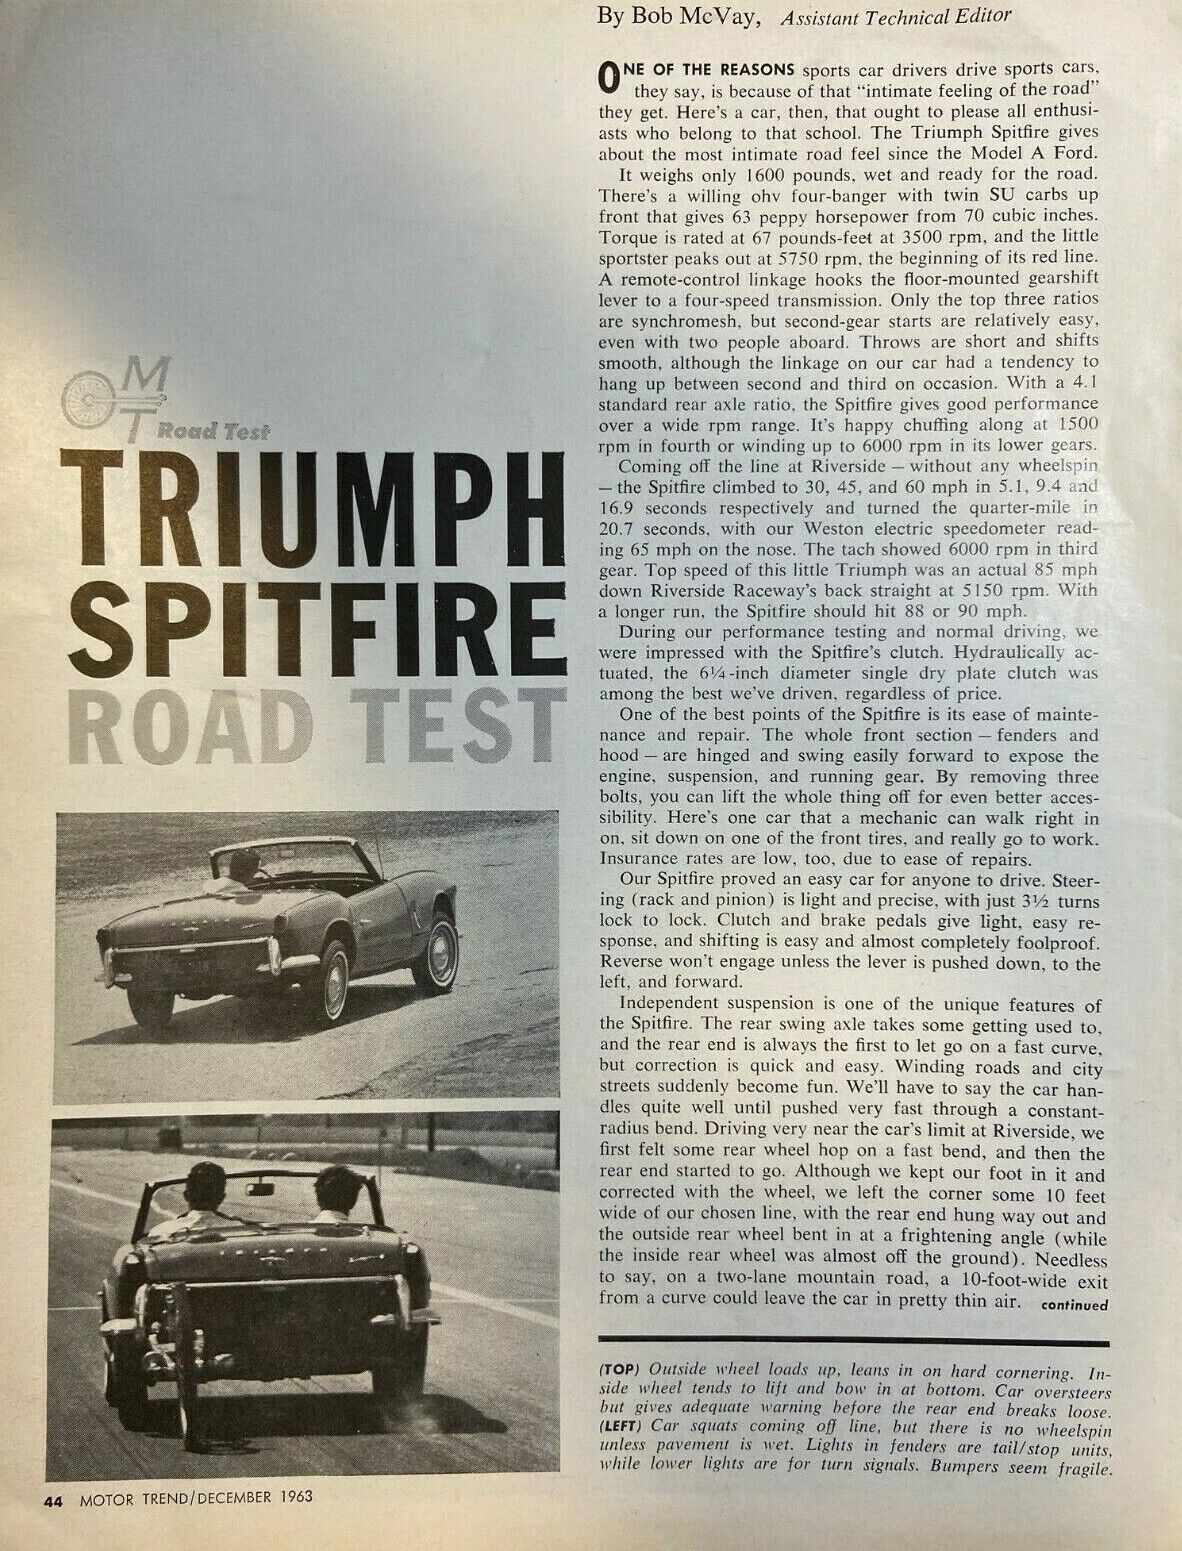 Road Test 1964 Triumph Spitfire illustrated